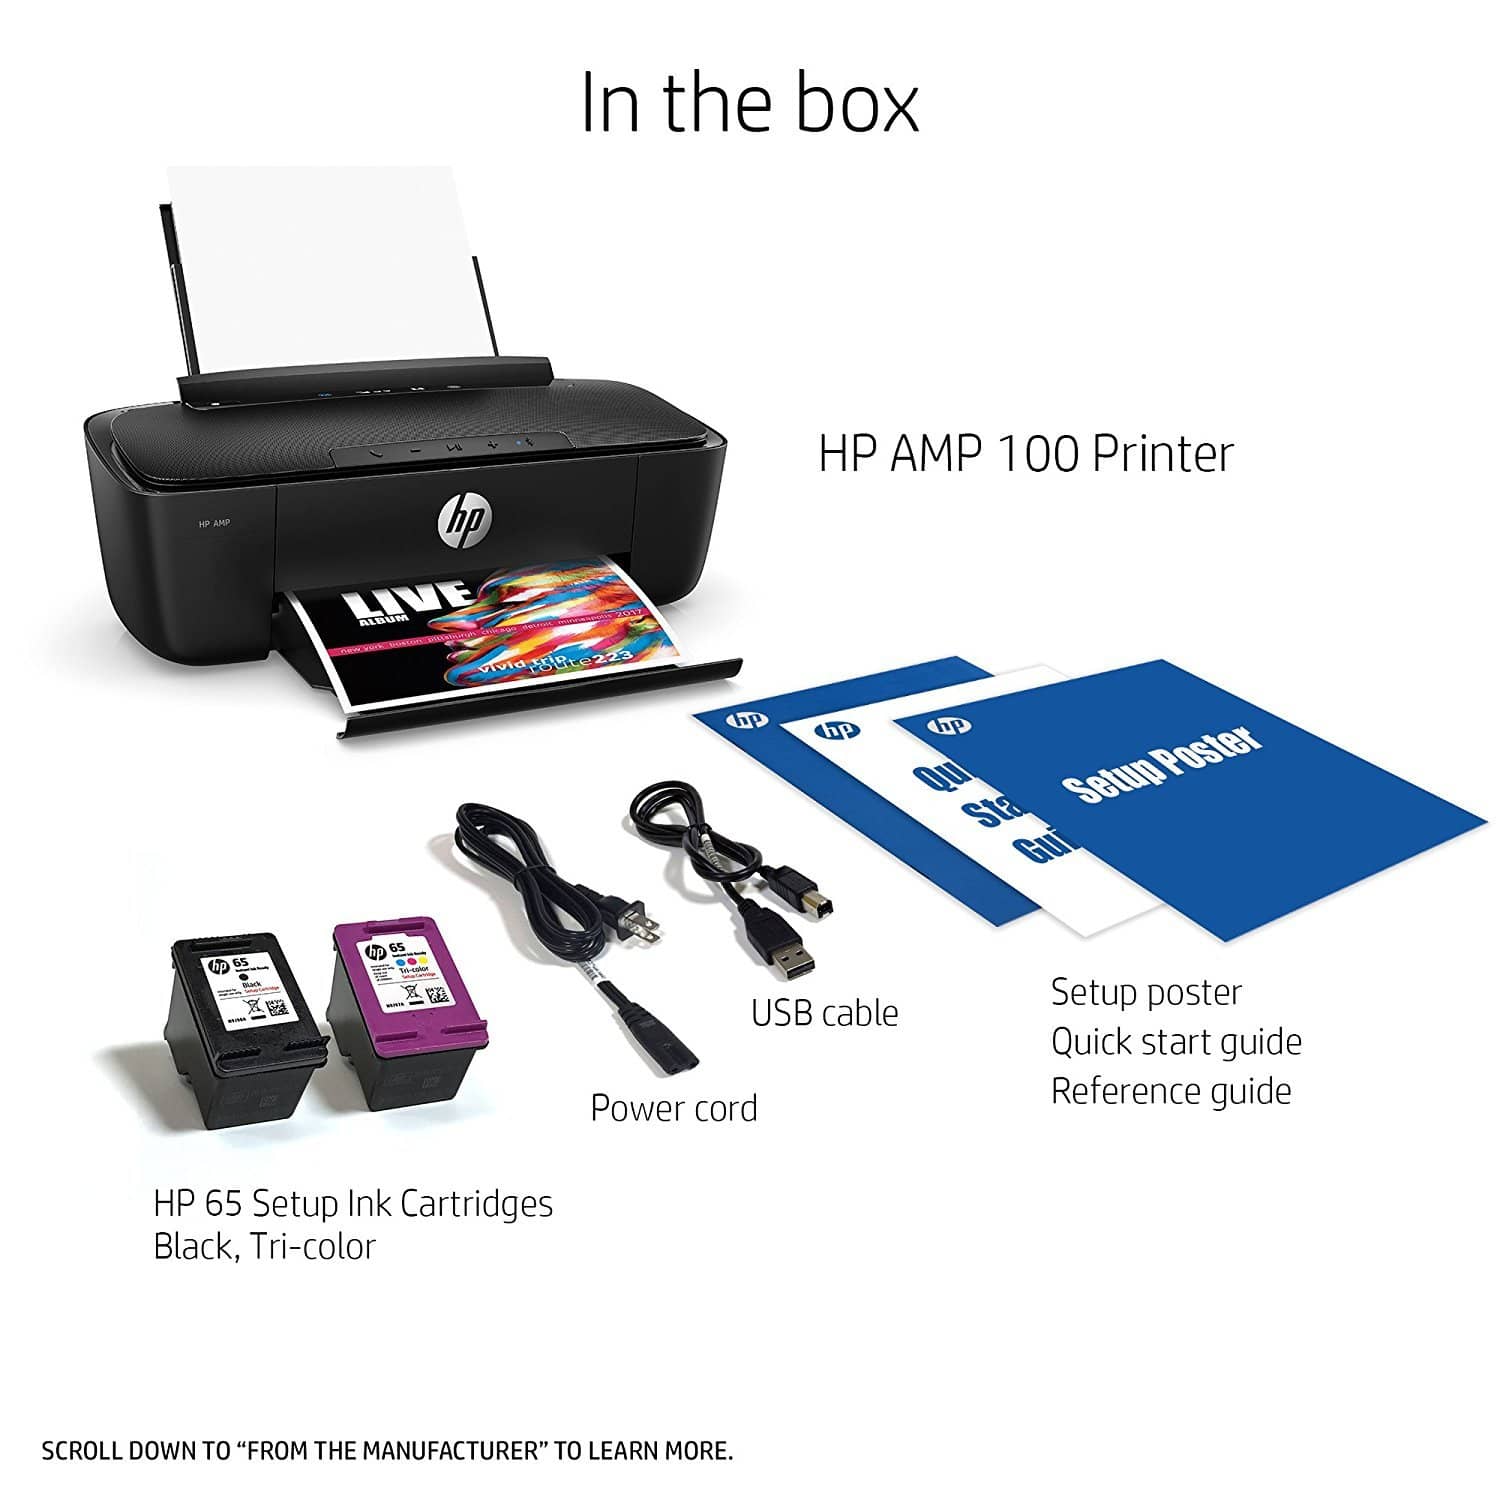 HP AMP 100 Wireless Printer – Printer and Bluetooth Speaker in One